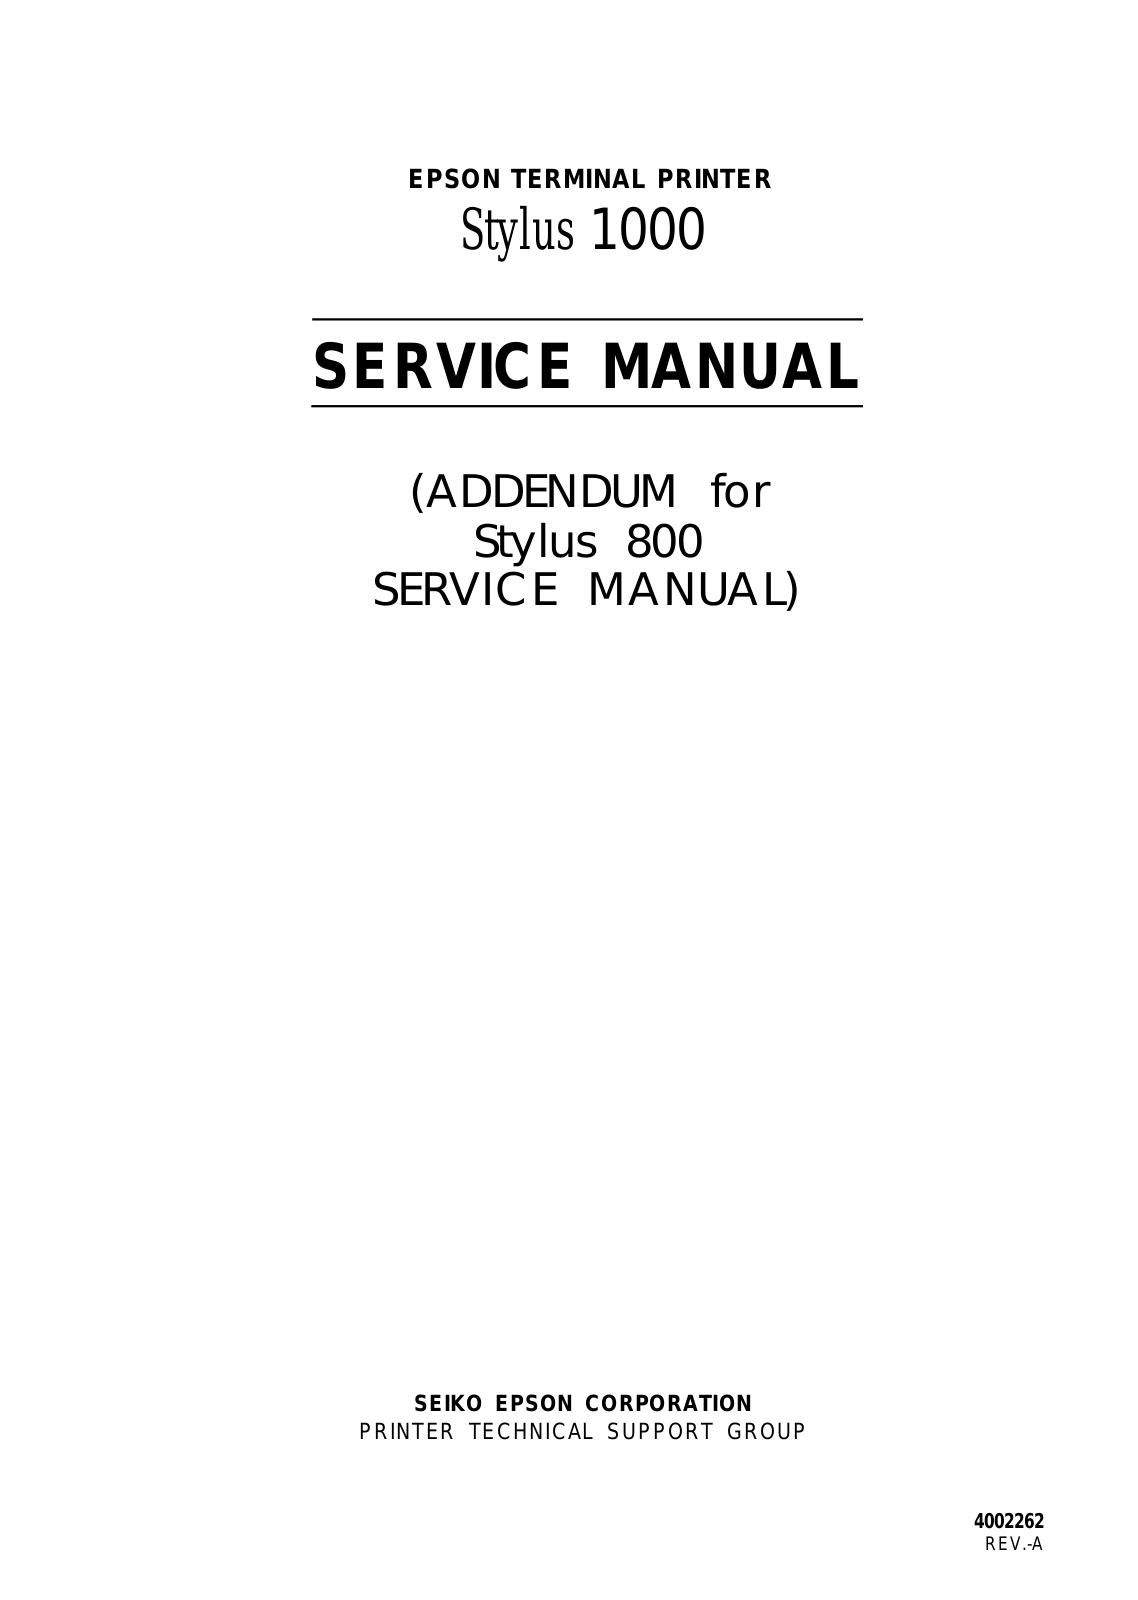 Epson Stylus 1000 Service Manual